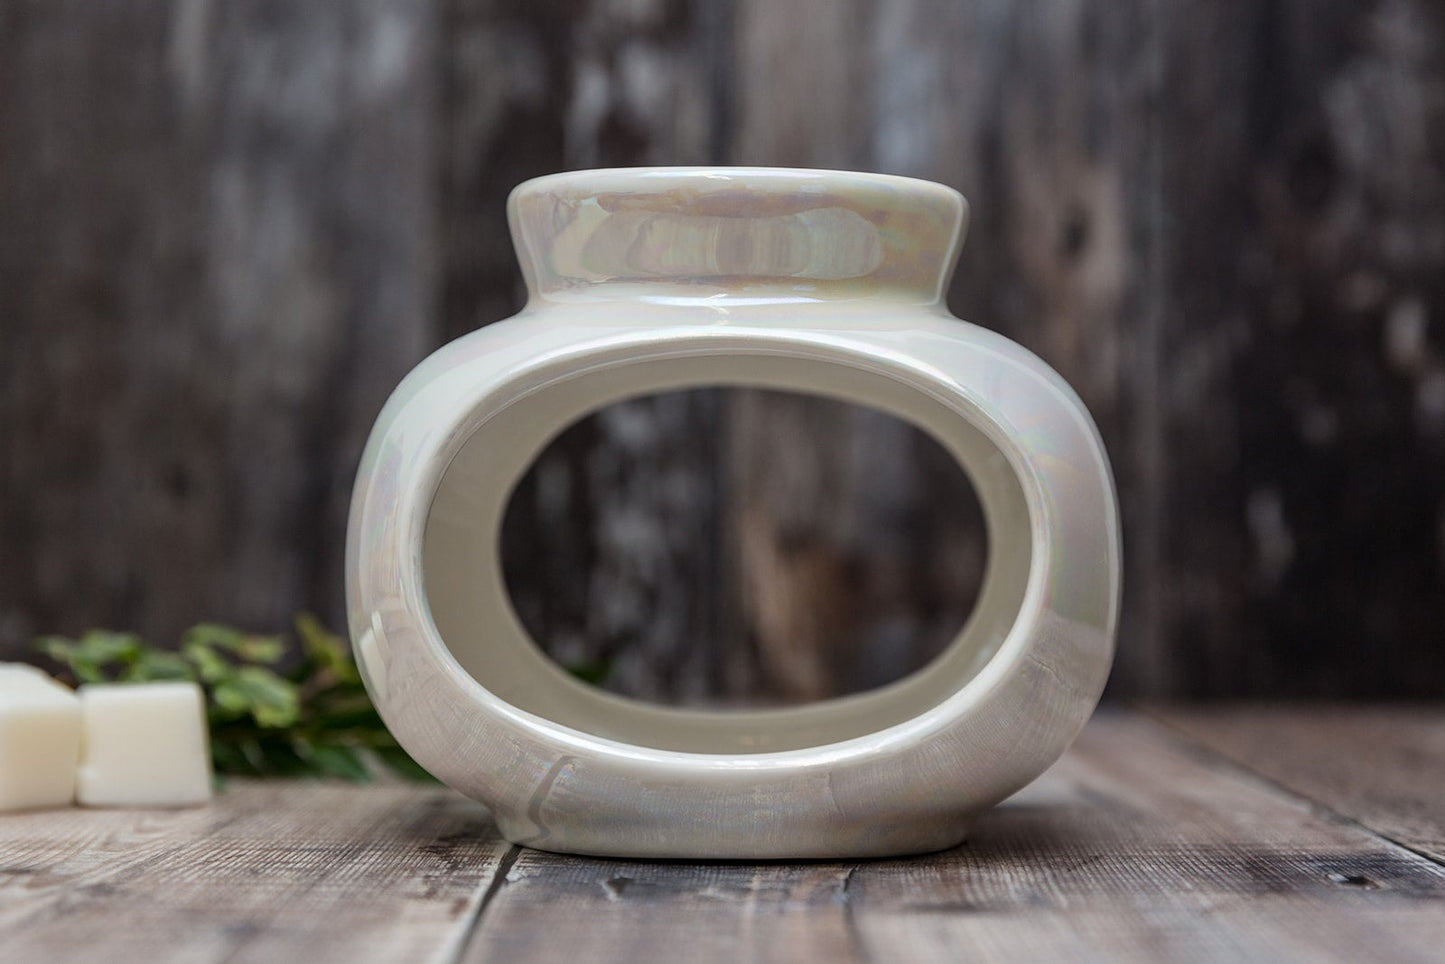 Oval Lustre Double Tea Light Wax Burner - A Melt In Time Ltd